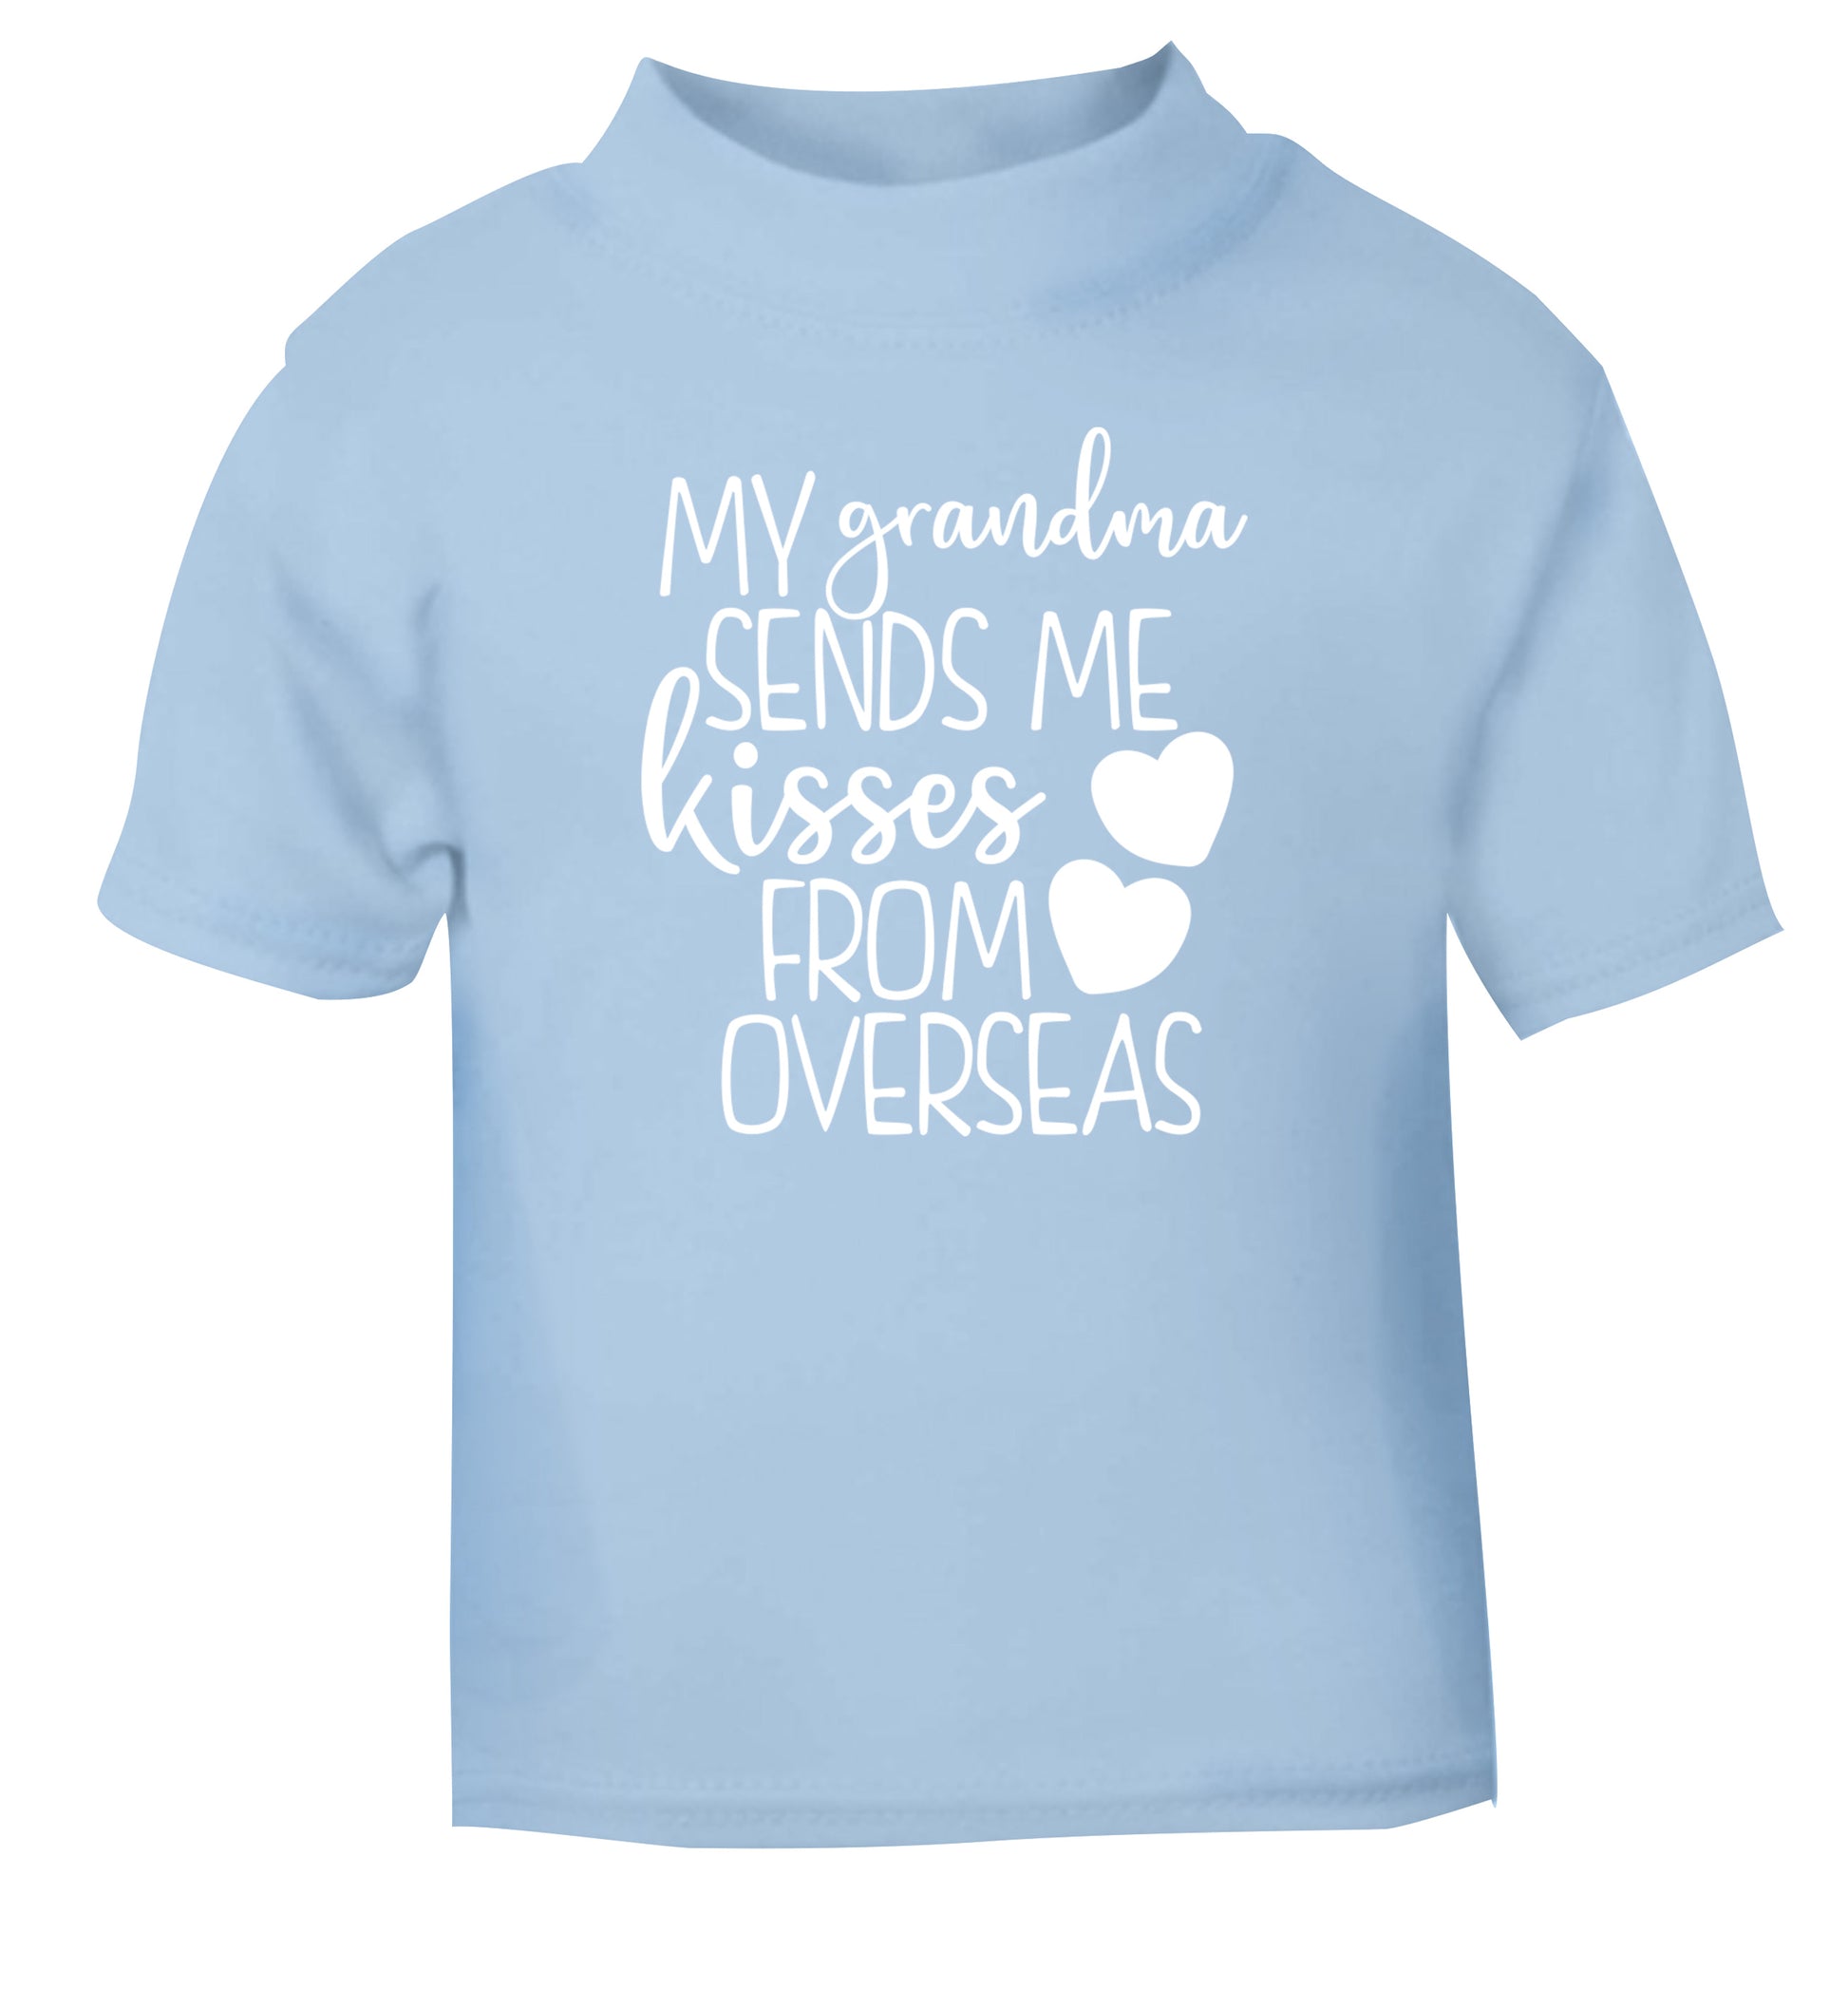 My Grandma sends me kisses from overseas light blue Baby Toddler Tshirt 2 Years